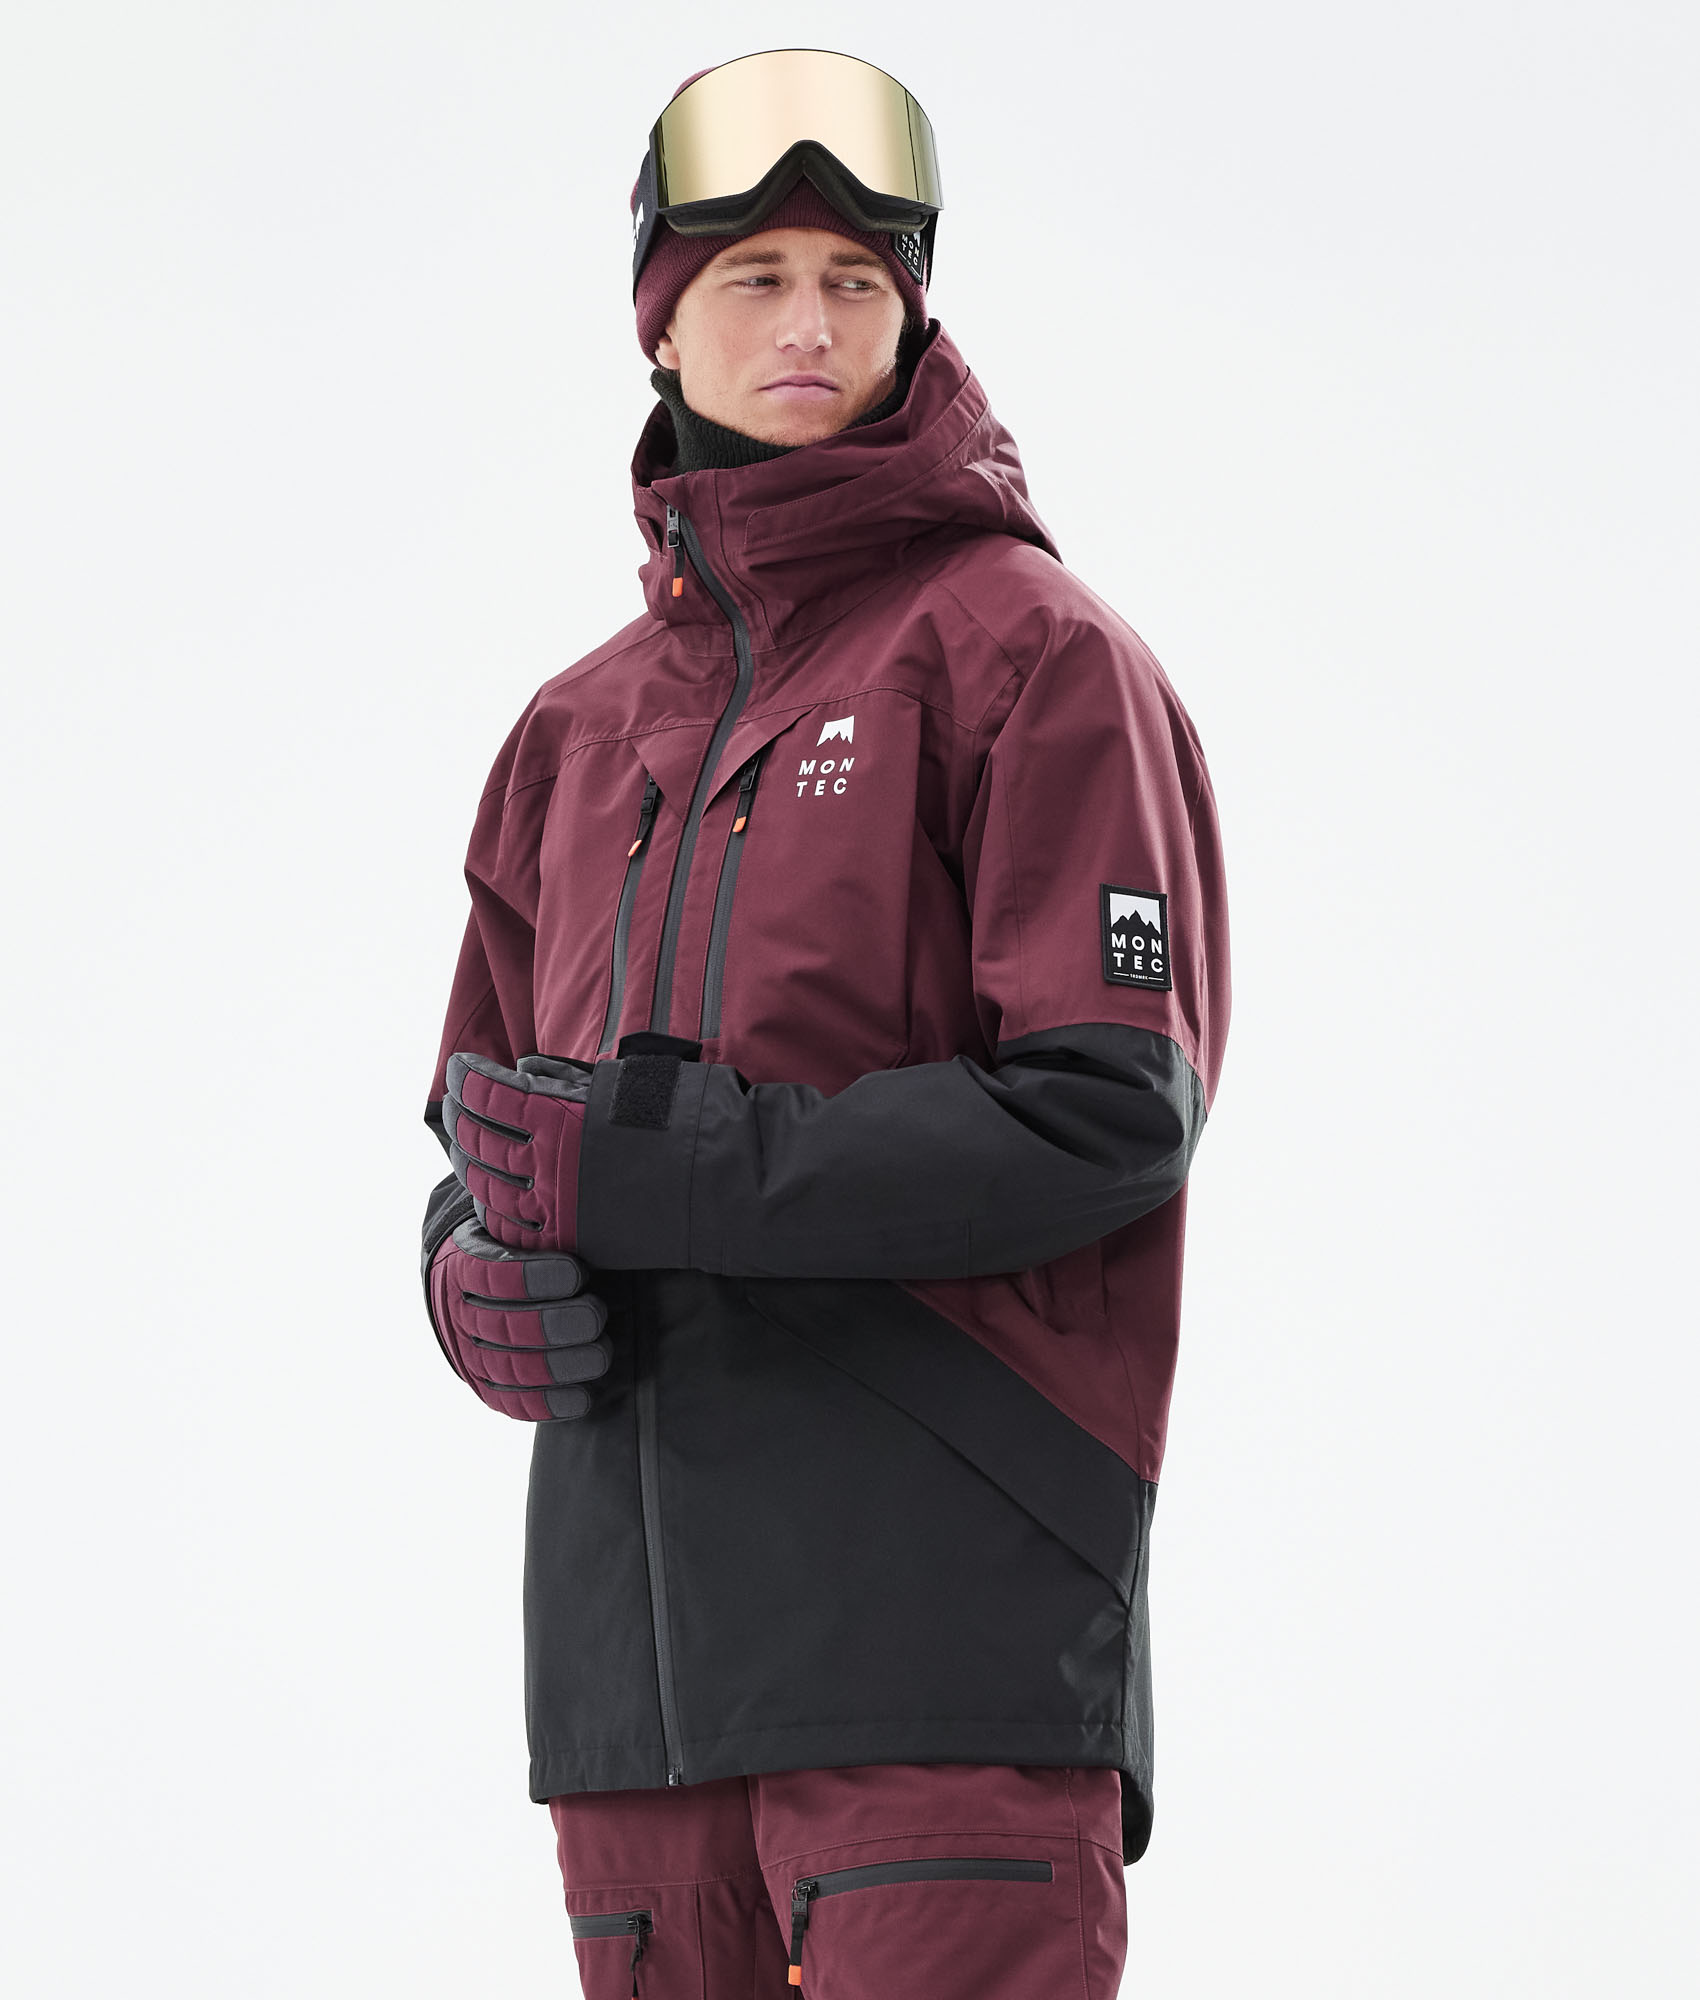 Moss Ski Jacket Burgundy/Black | Montecwear.com